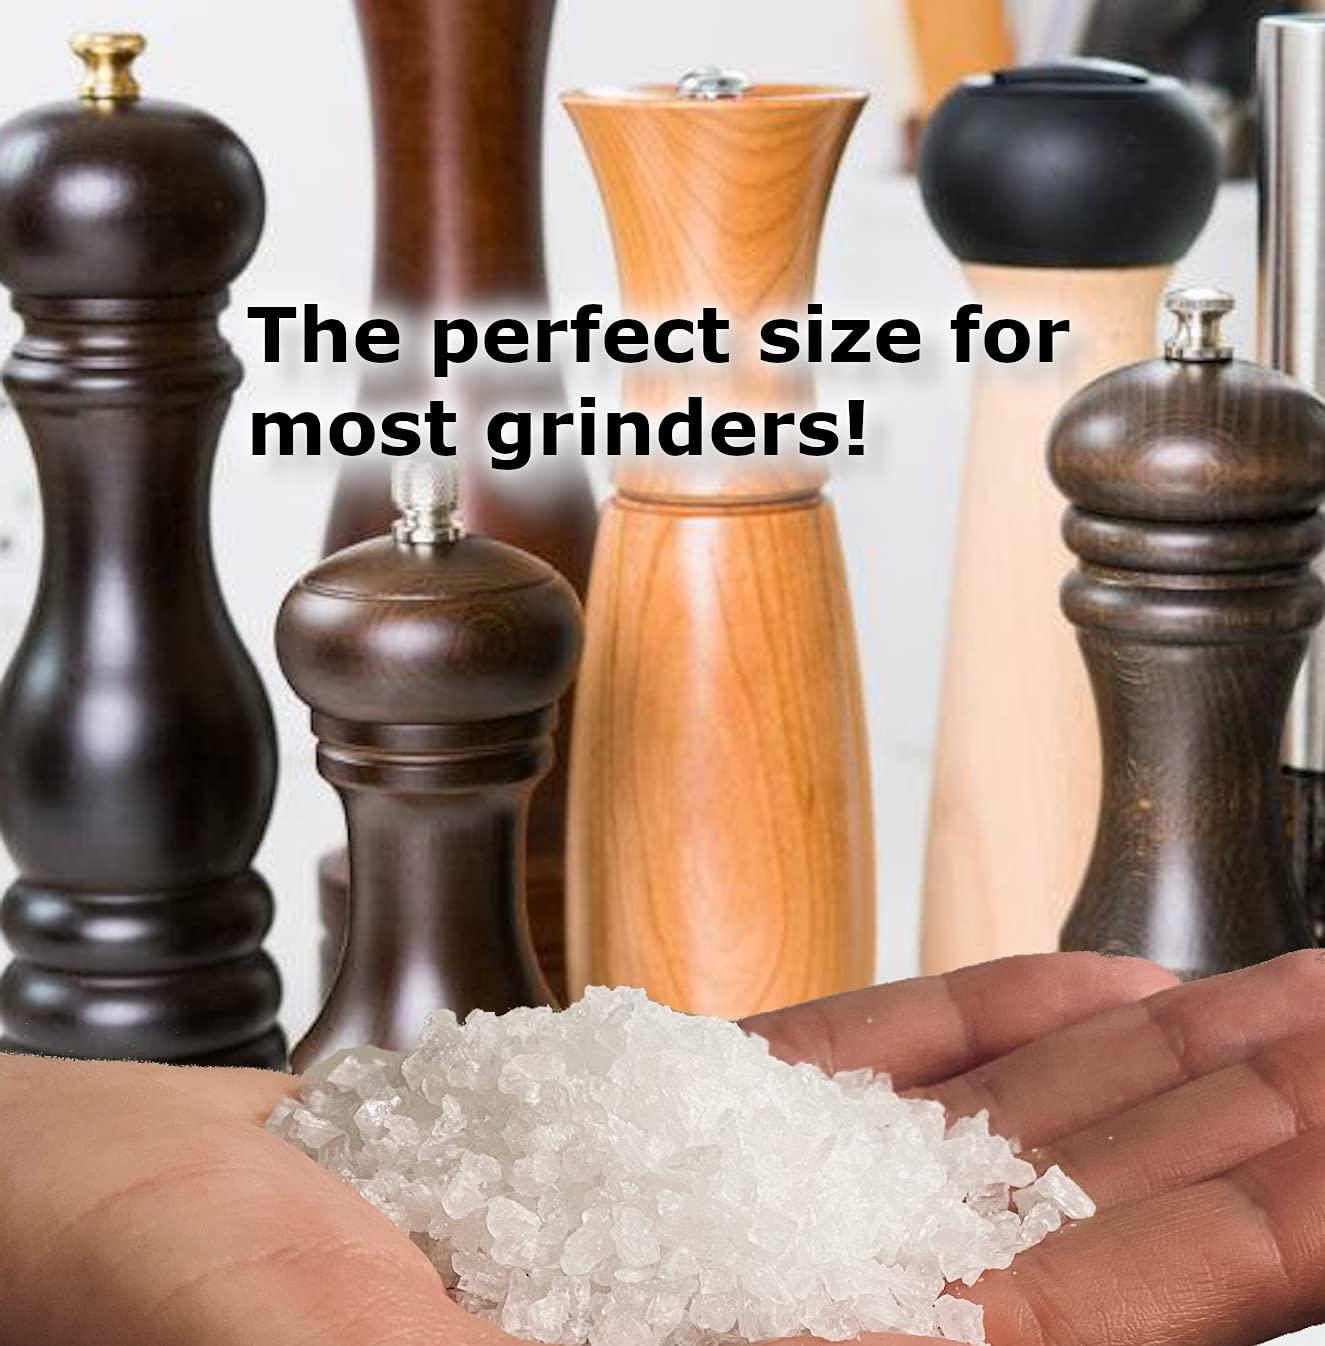 The Real Reason Salt Grinders Exist, According To Reddit